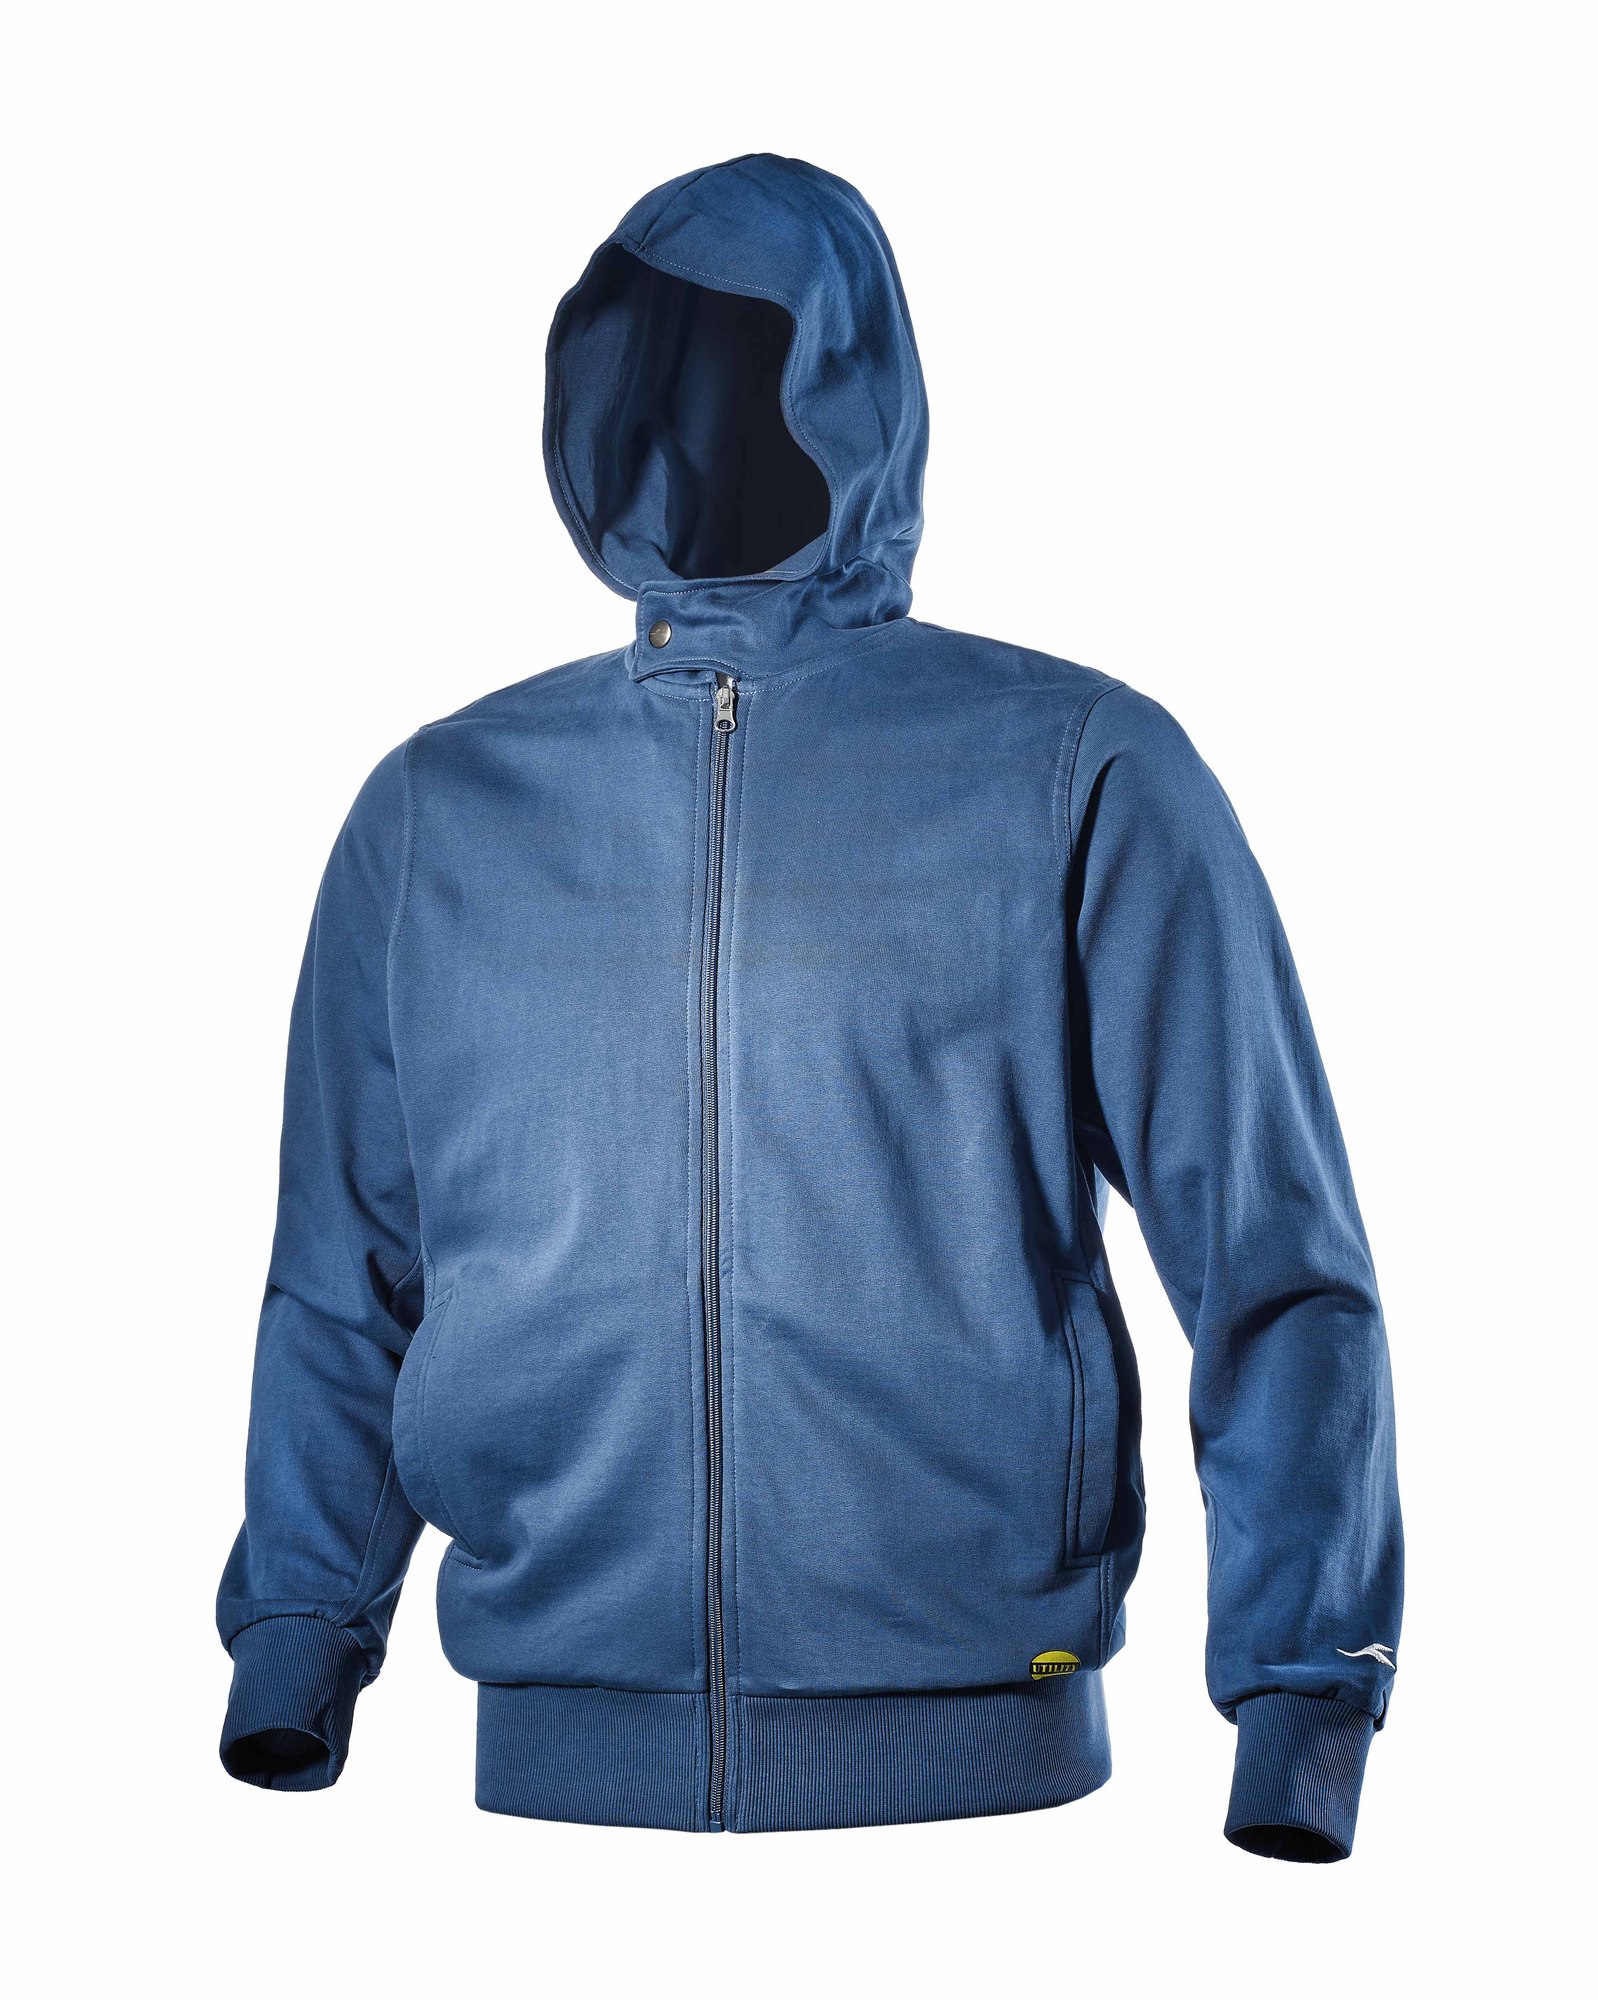 Sweatshirt THUNDER bleu roi TL - DIADORA SPA - 702.157767.L 60030